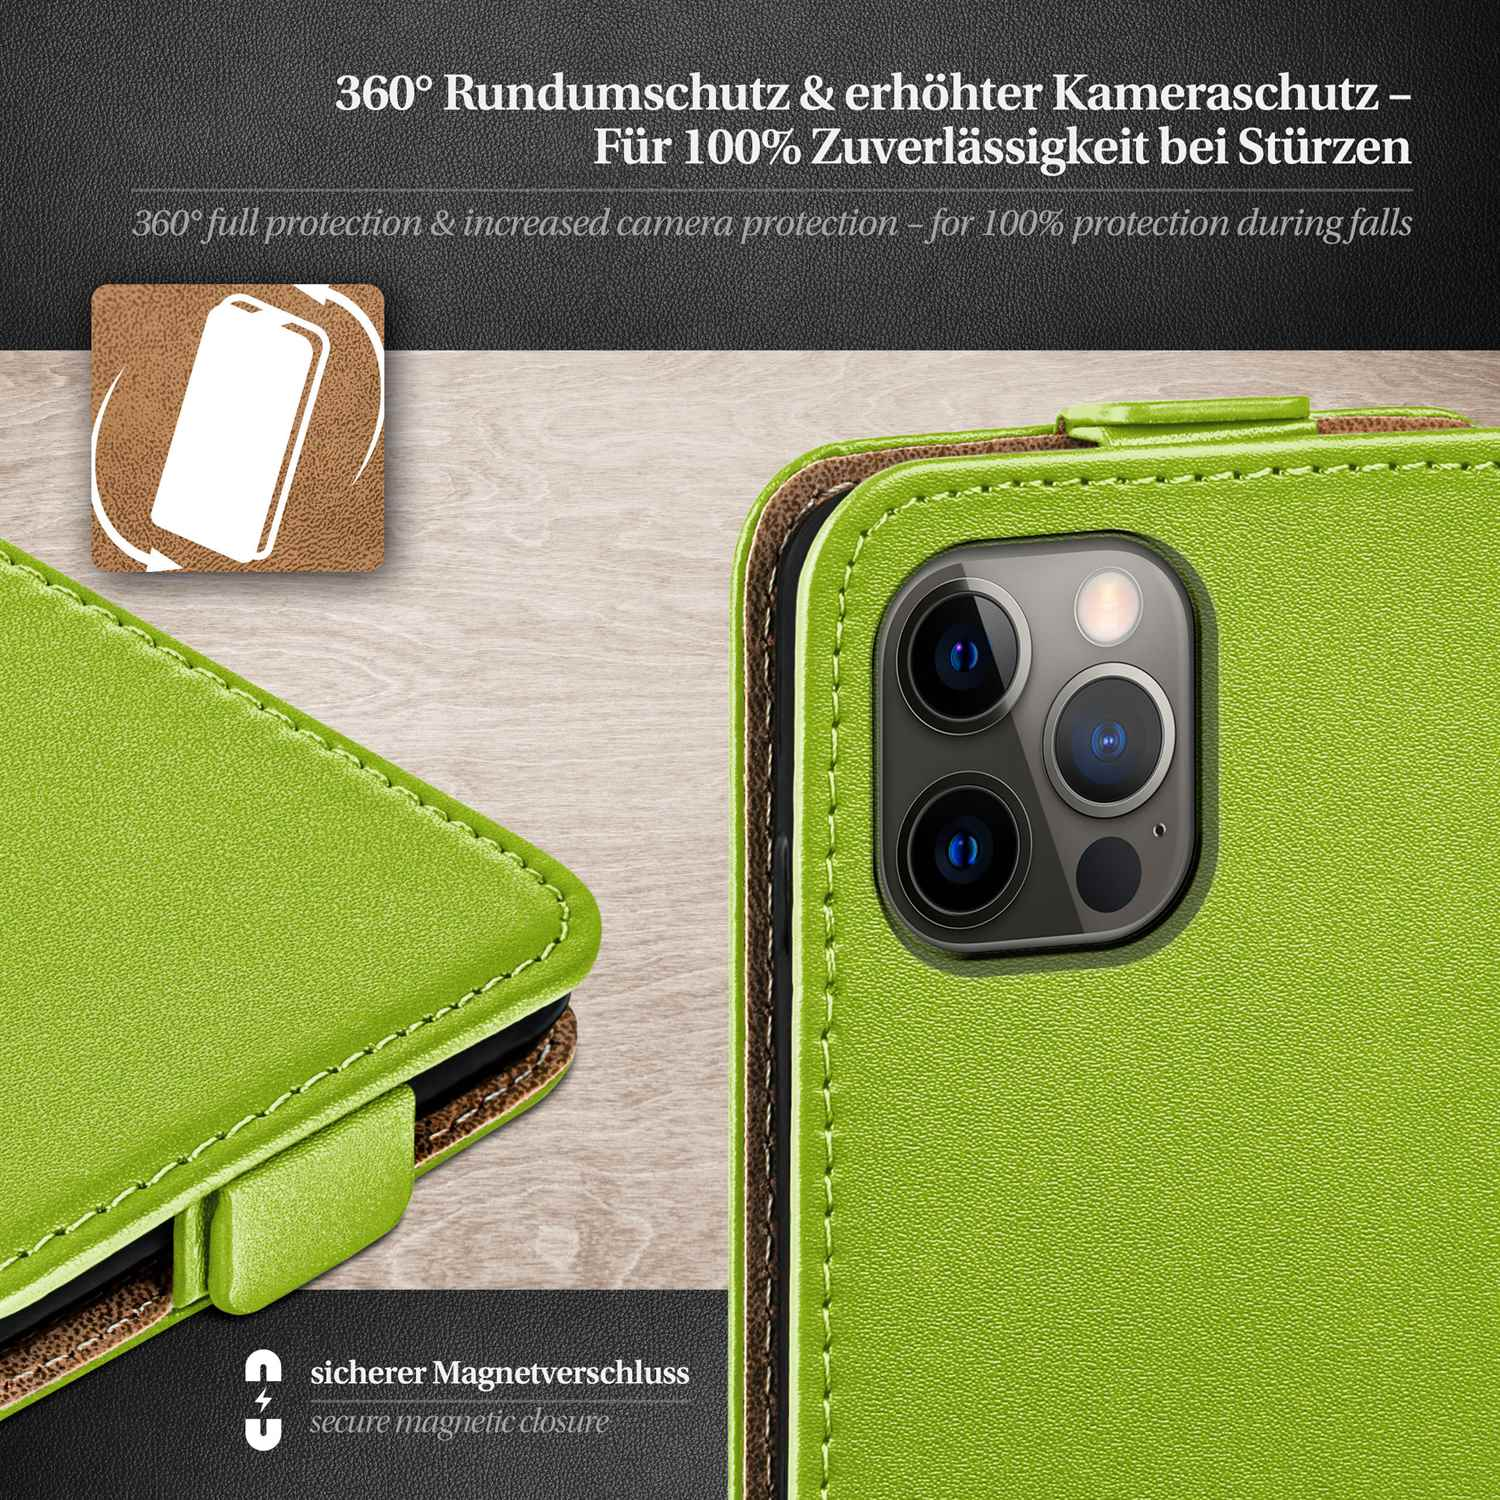 Lime-Green 12 Flip Pro, Apple, Flip Case, iPhone Cover, MOEX